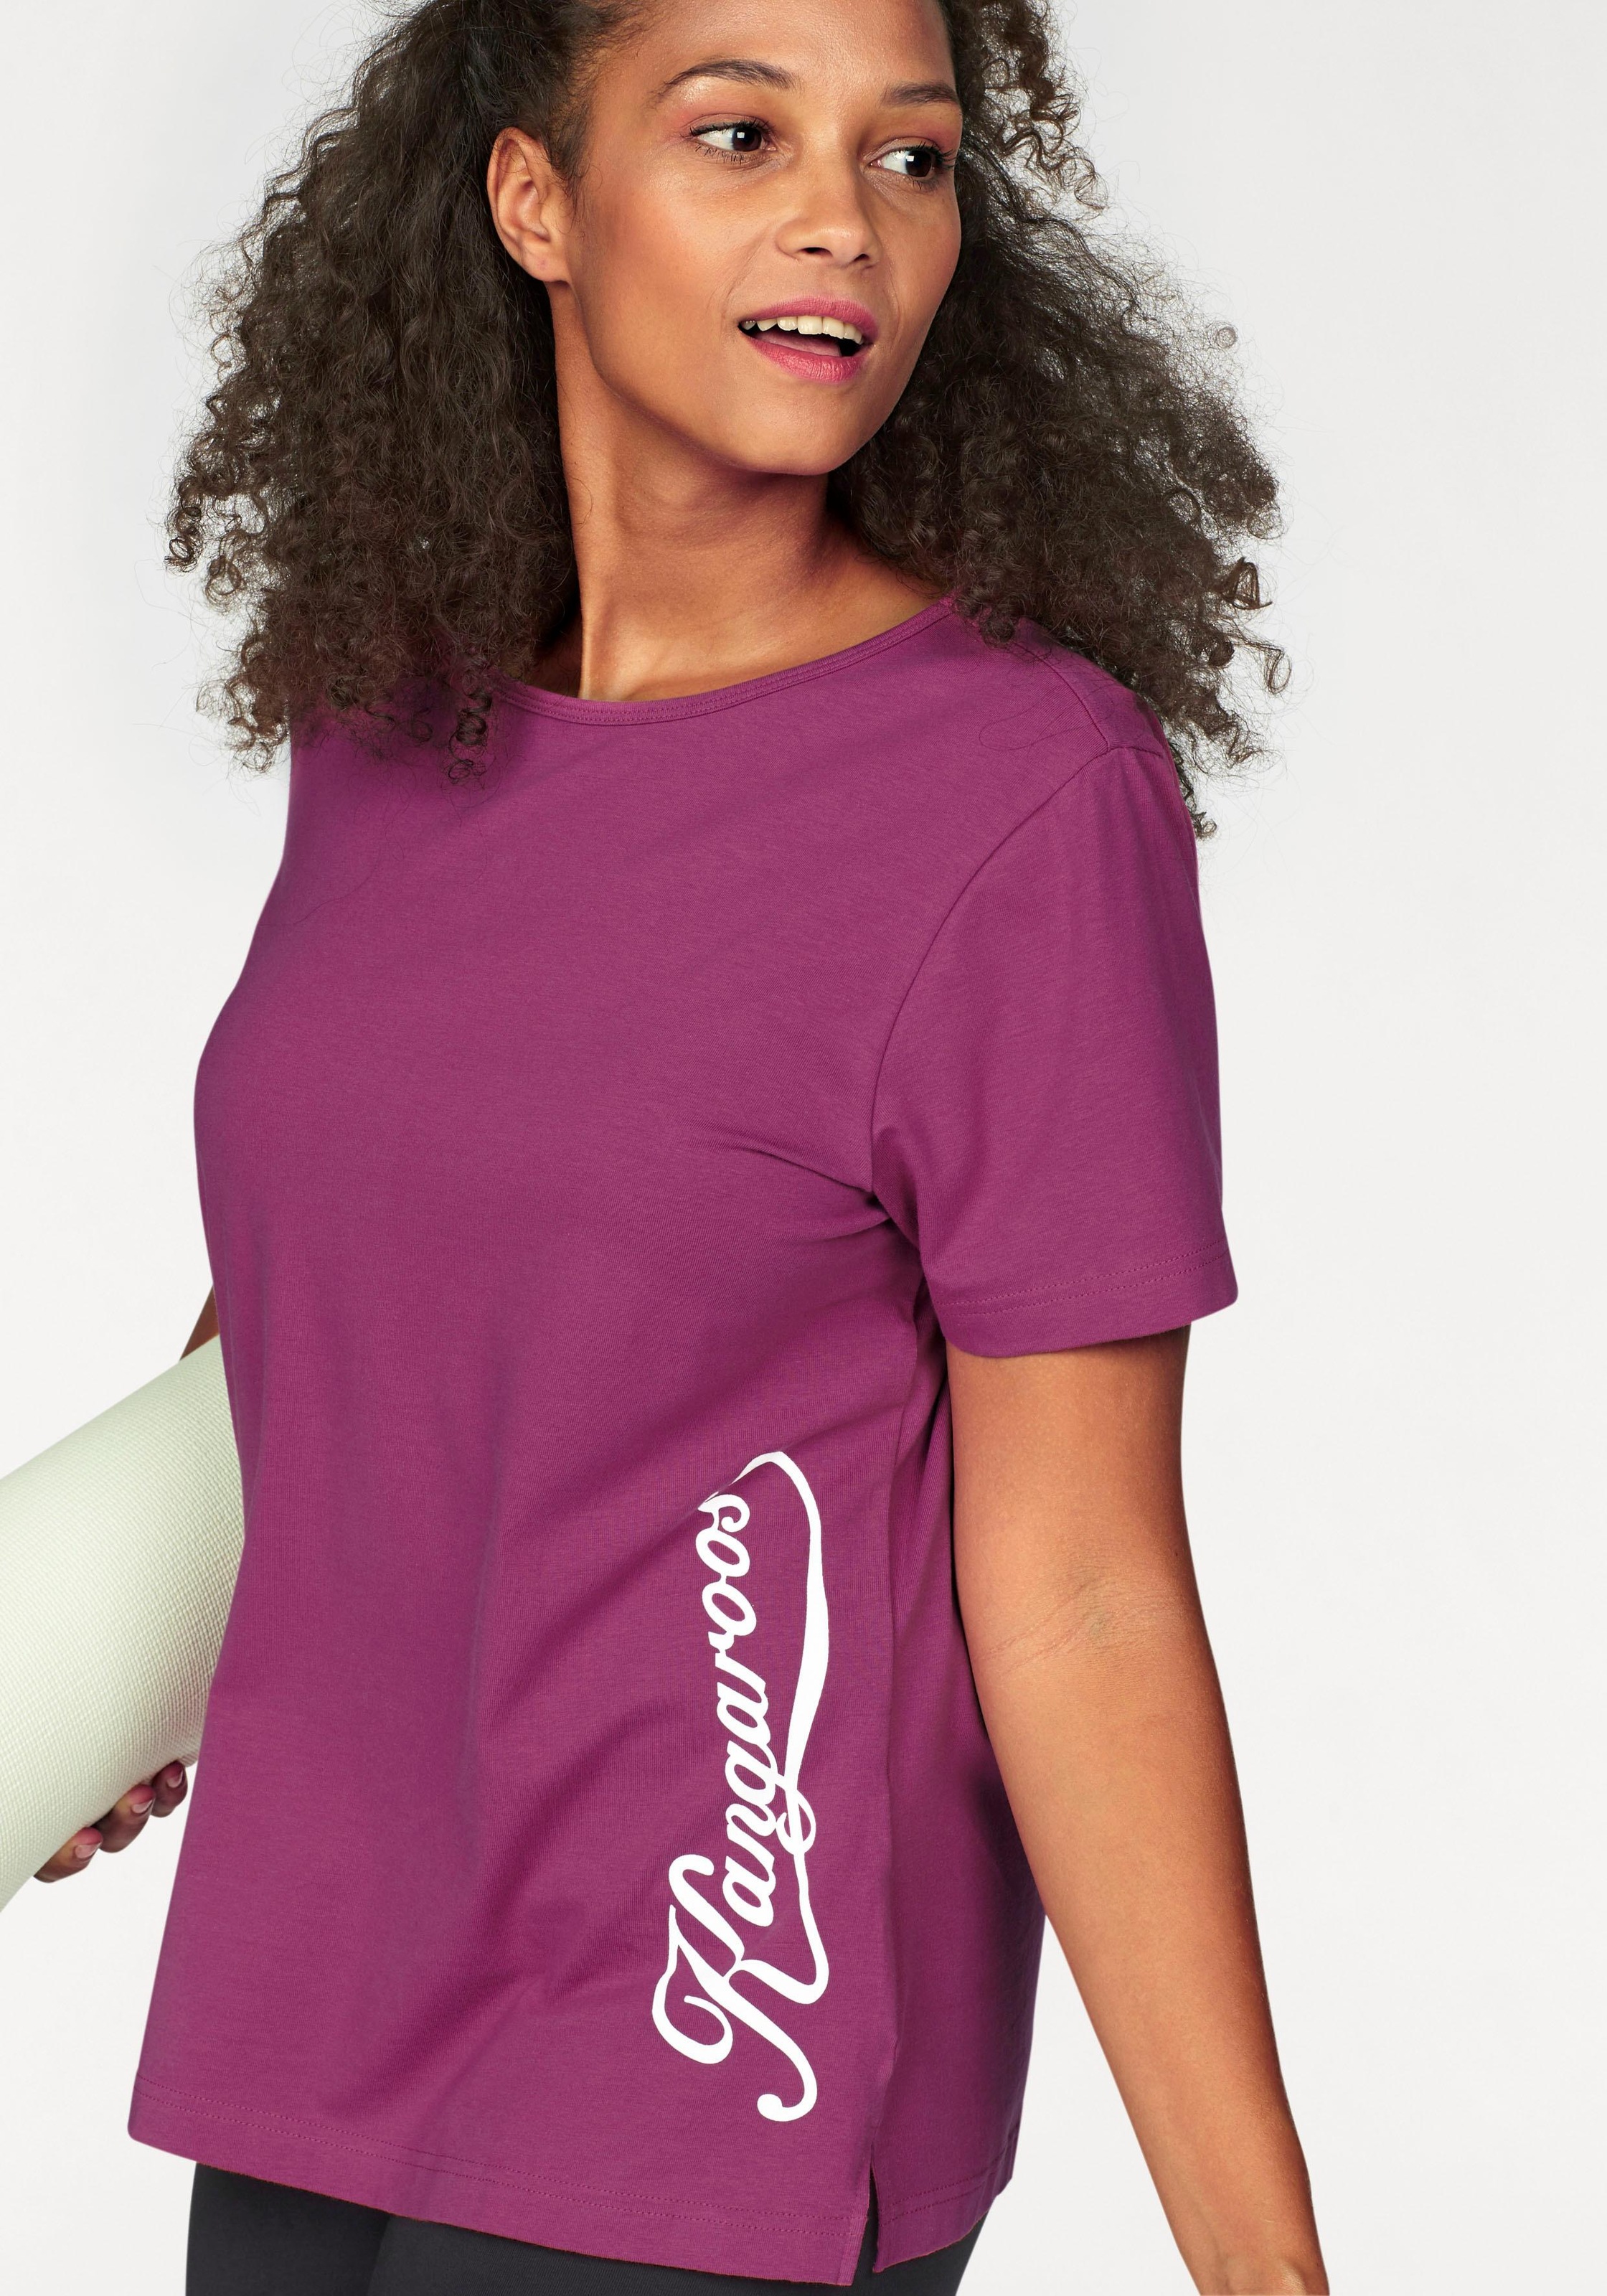 KangaROOS T-Shirt, Größen bestellen Große online